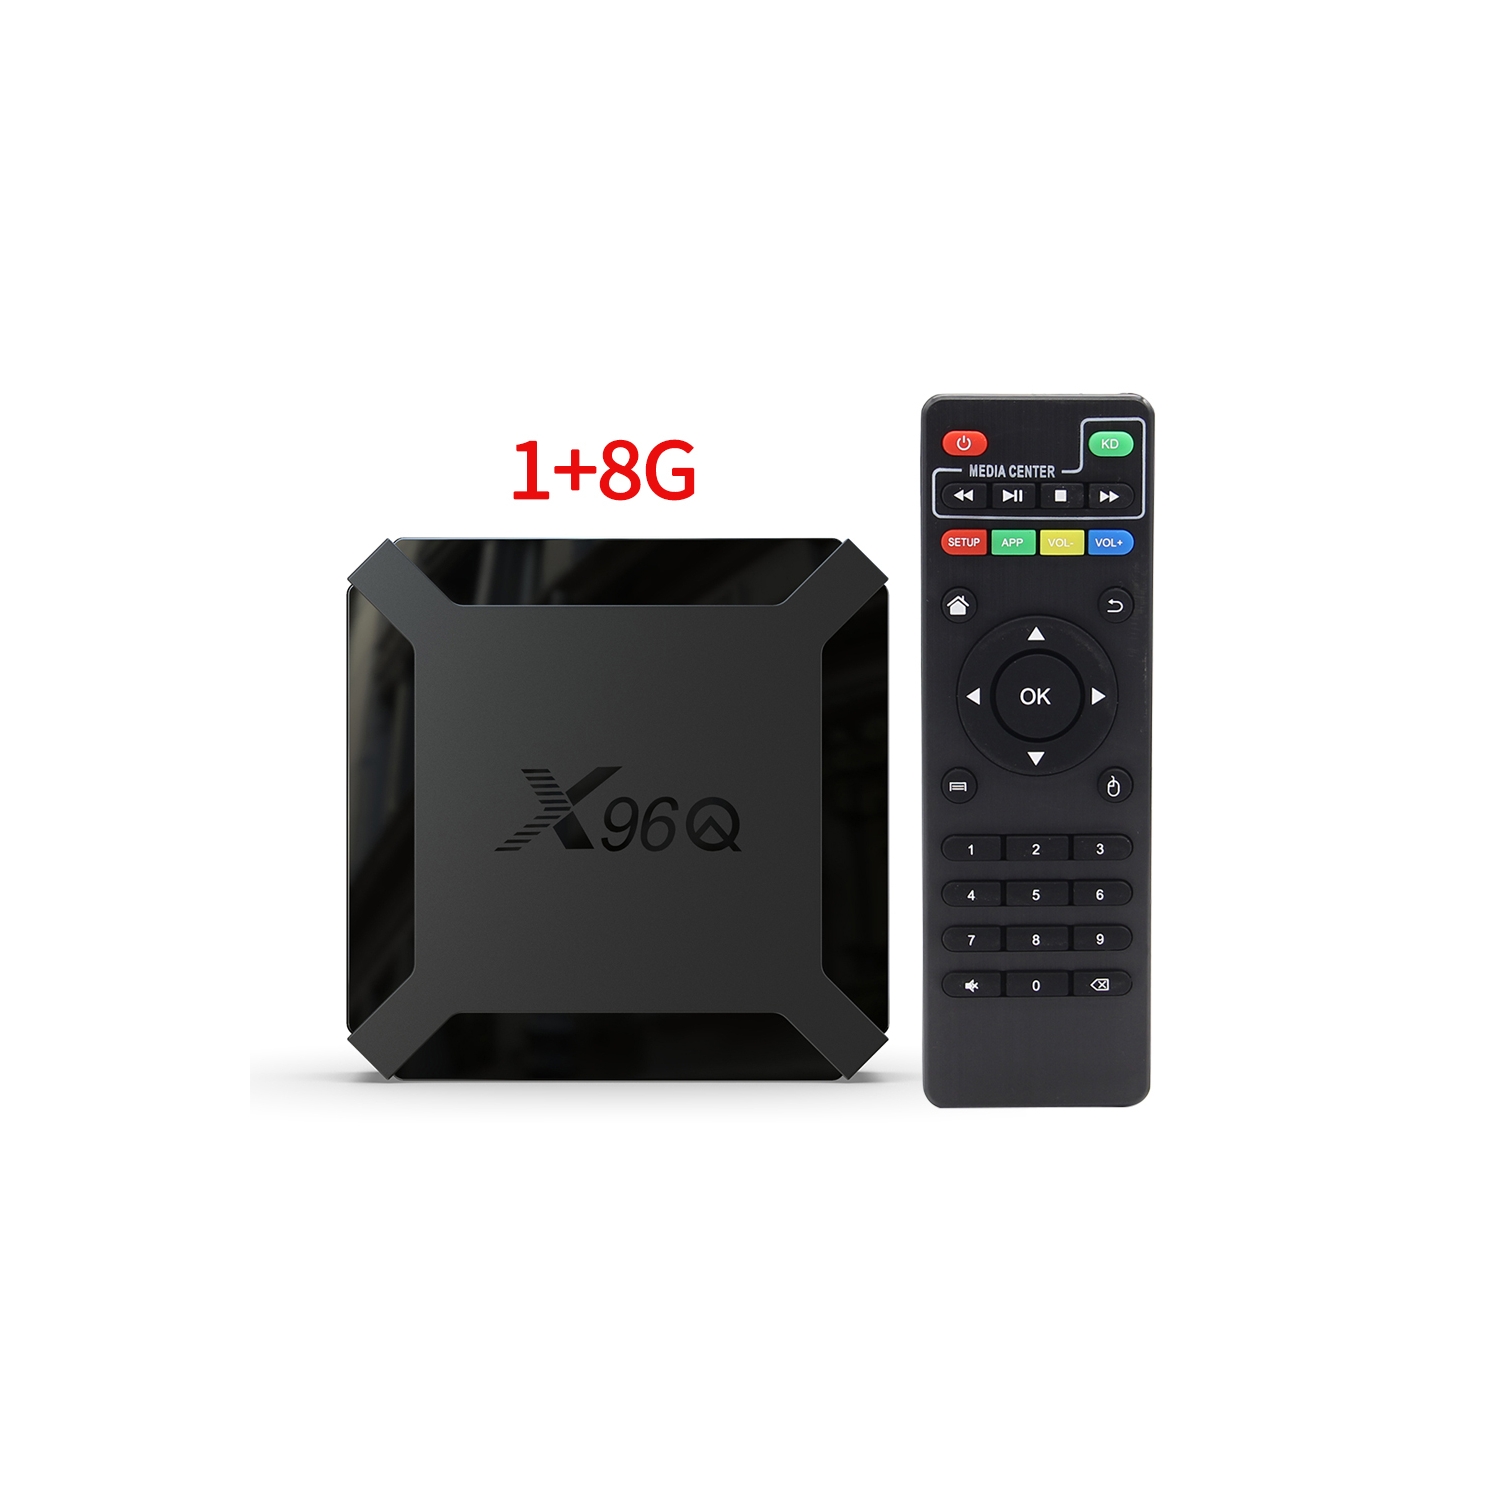 X96Q 1G8G TV Box Android 2.4G Wifi Allwinner H313